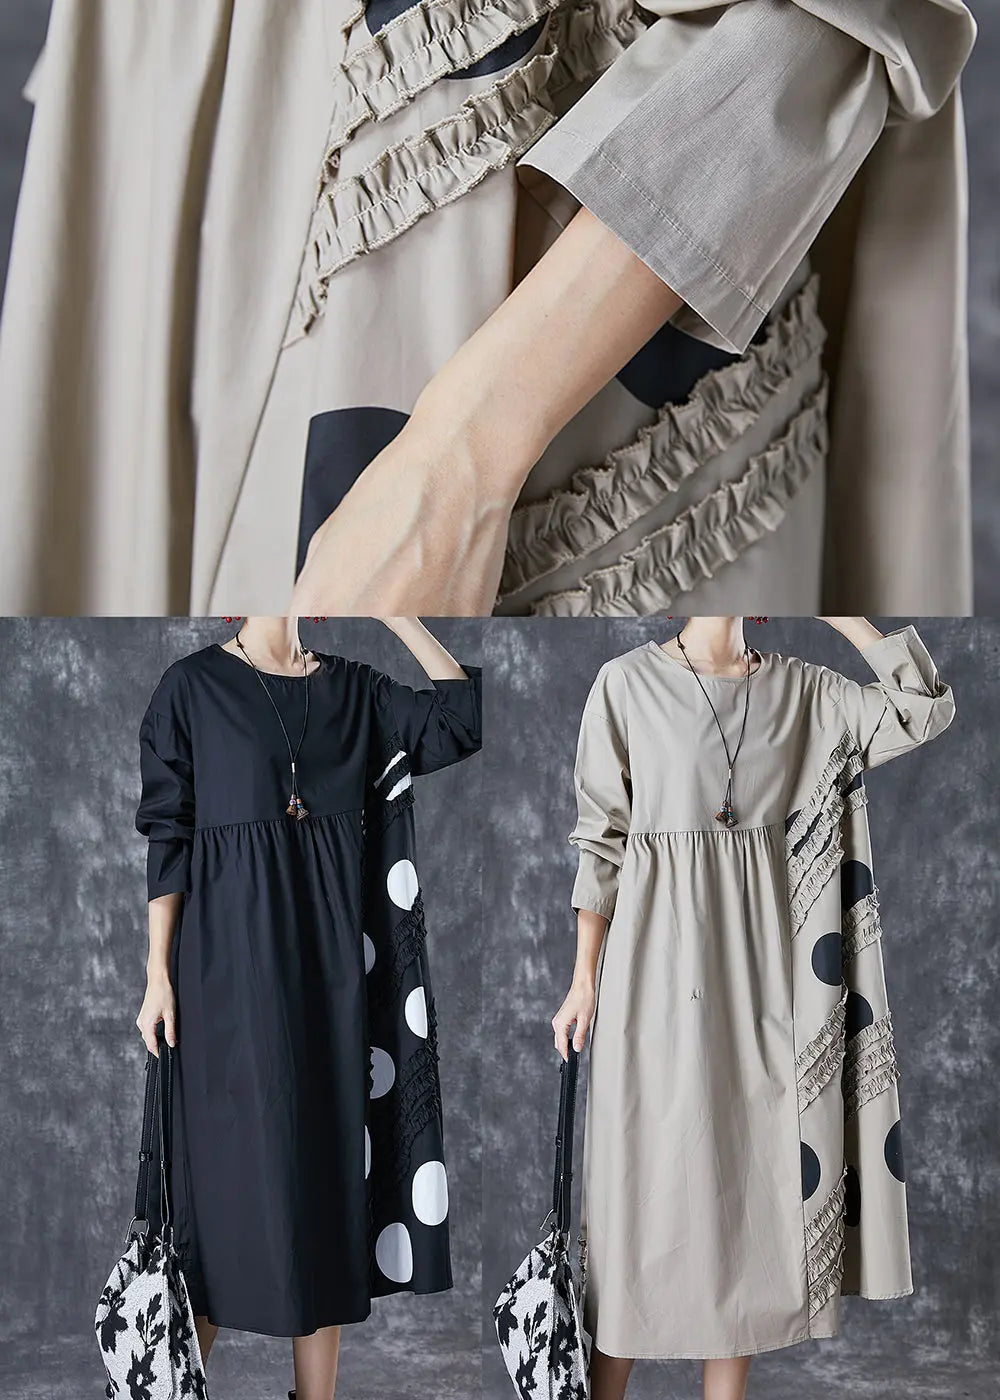 Style Black Ruffled Patchwork Cotton Dress Spring Ada Fashion